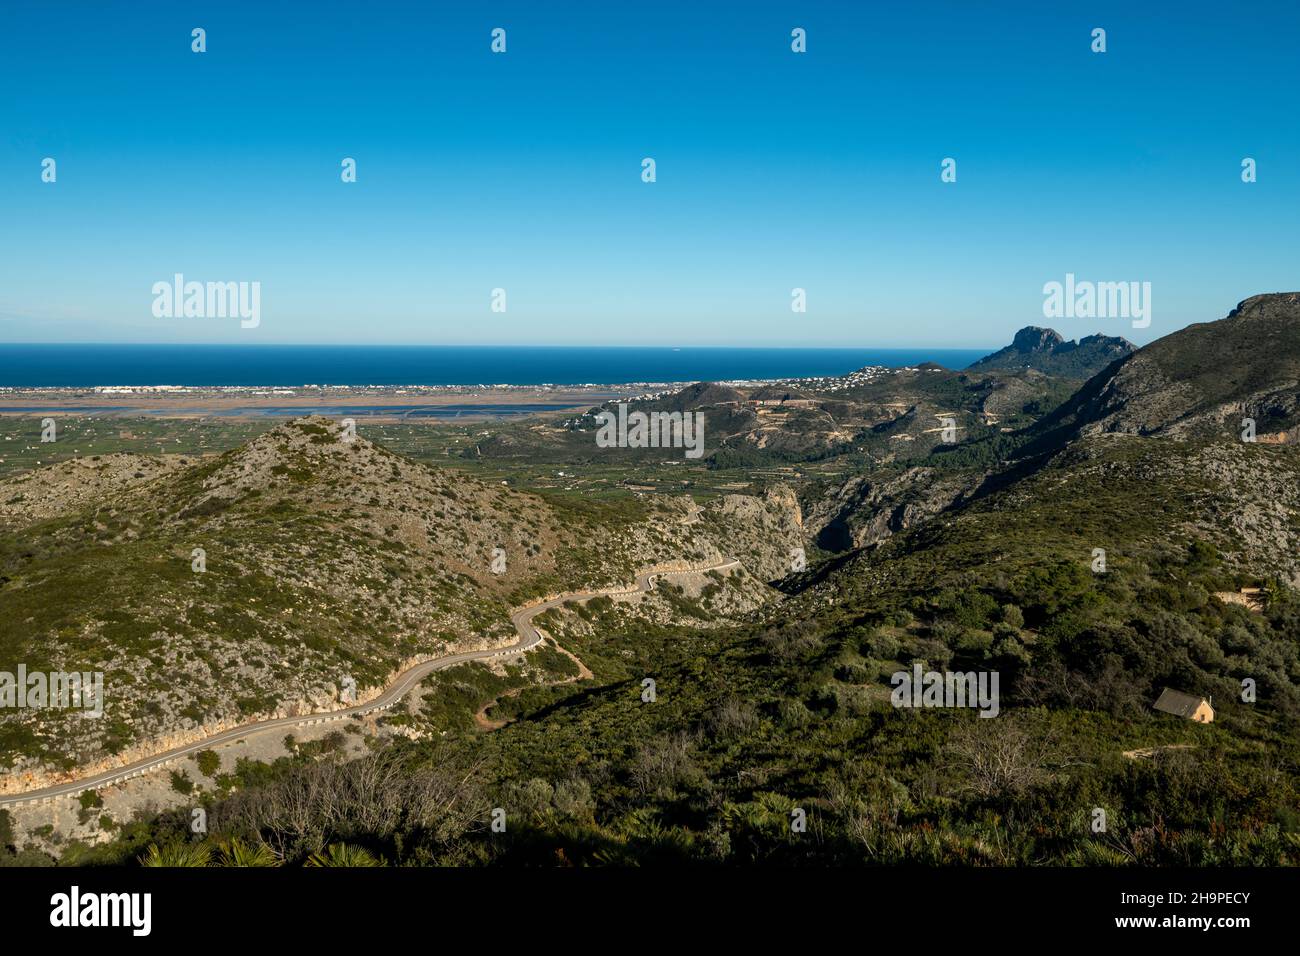 Winding mountain road between Pego village and Vall d'Ebo, Marina Alta, Costa Blanca, Alicante Province, Spain Stock Photo